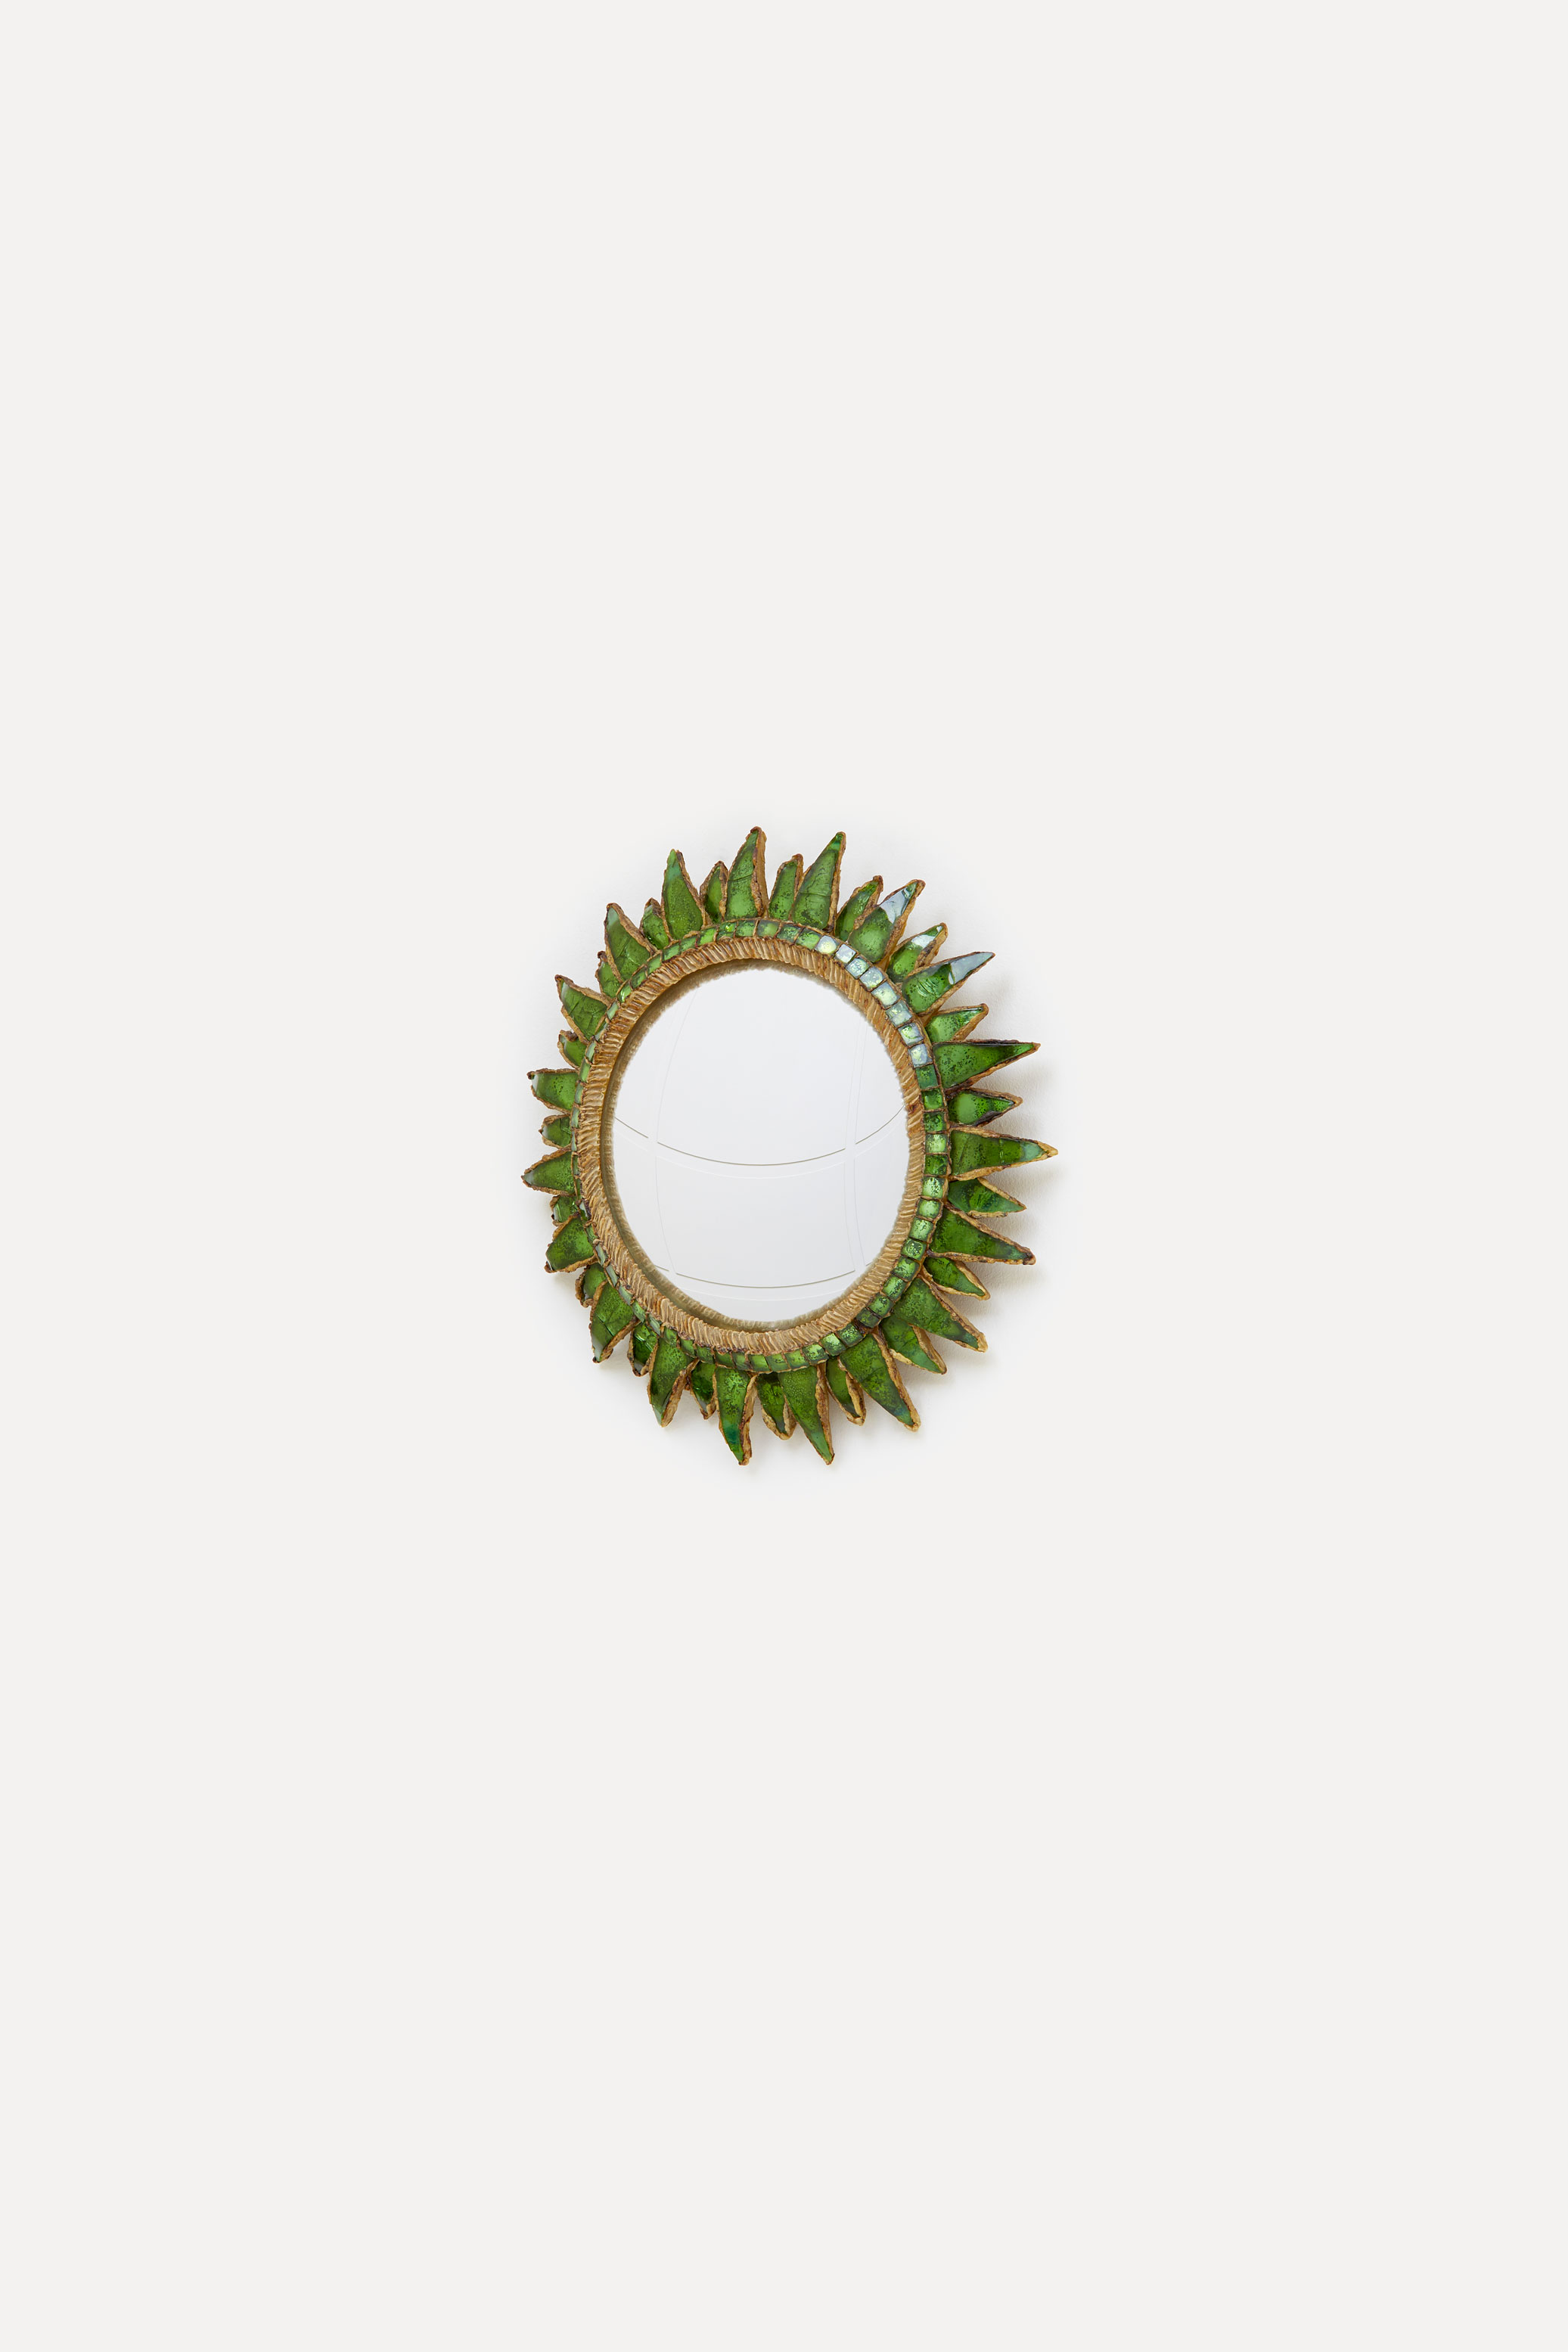 Line Vautrin, “Soleil à pointes” n°2 mirror, vue 01